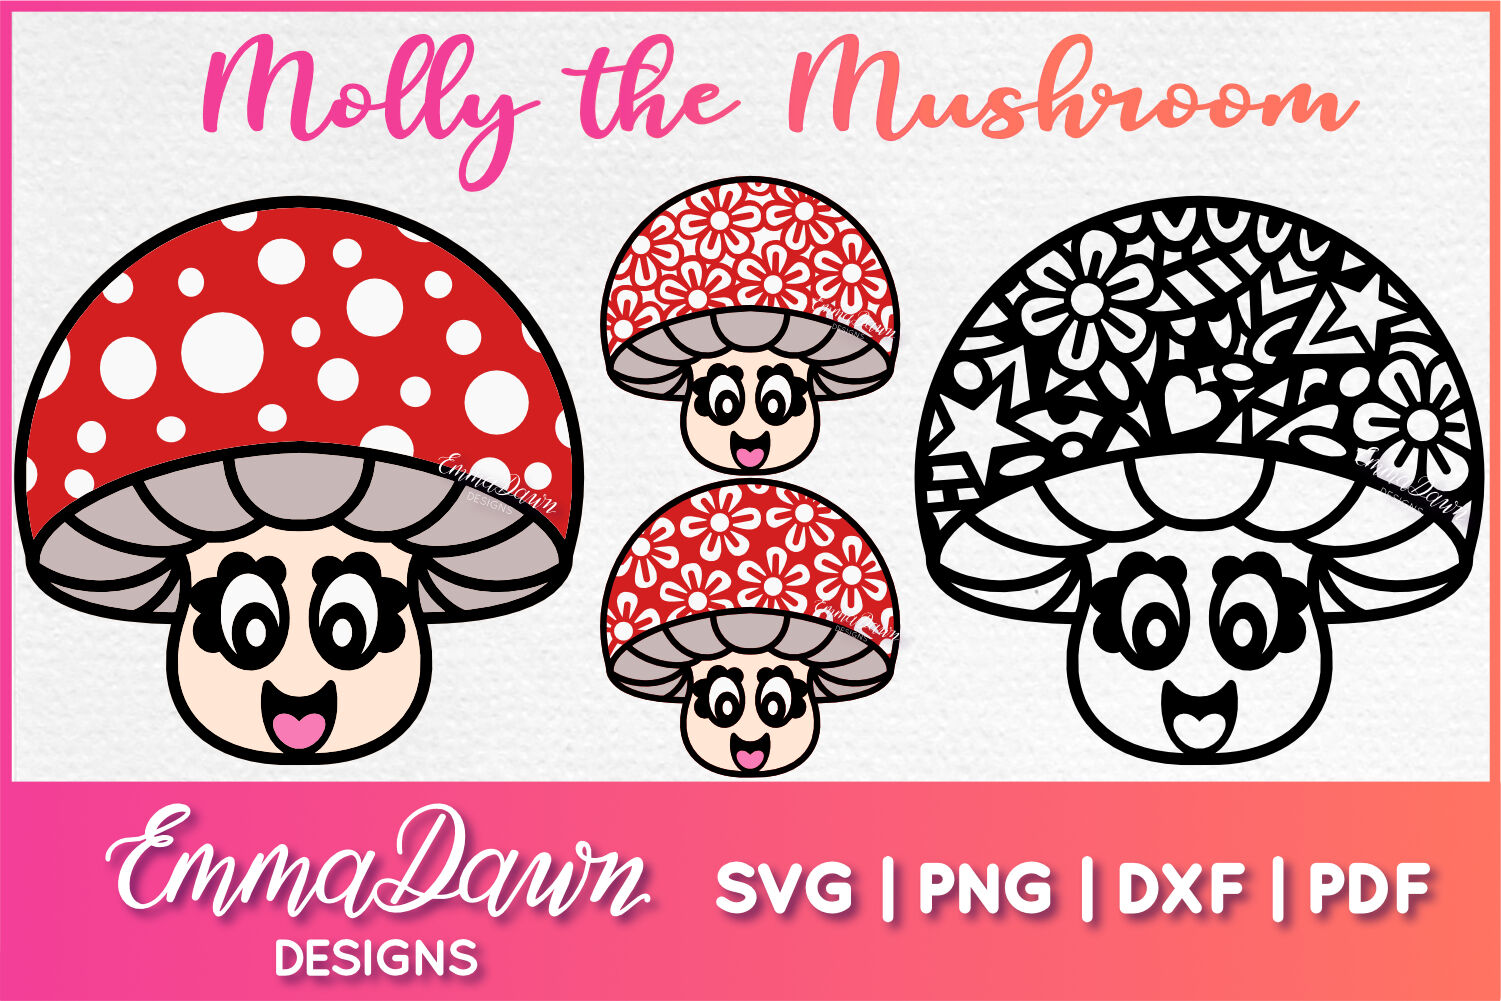 Colorful molly mushrooms.